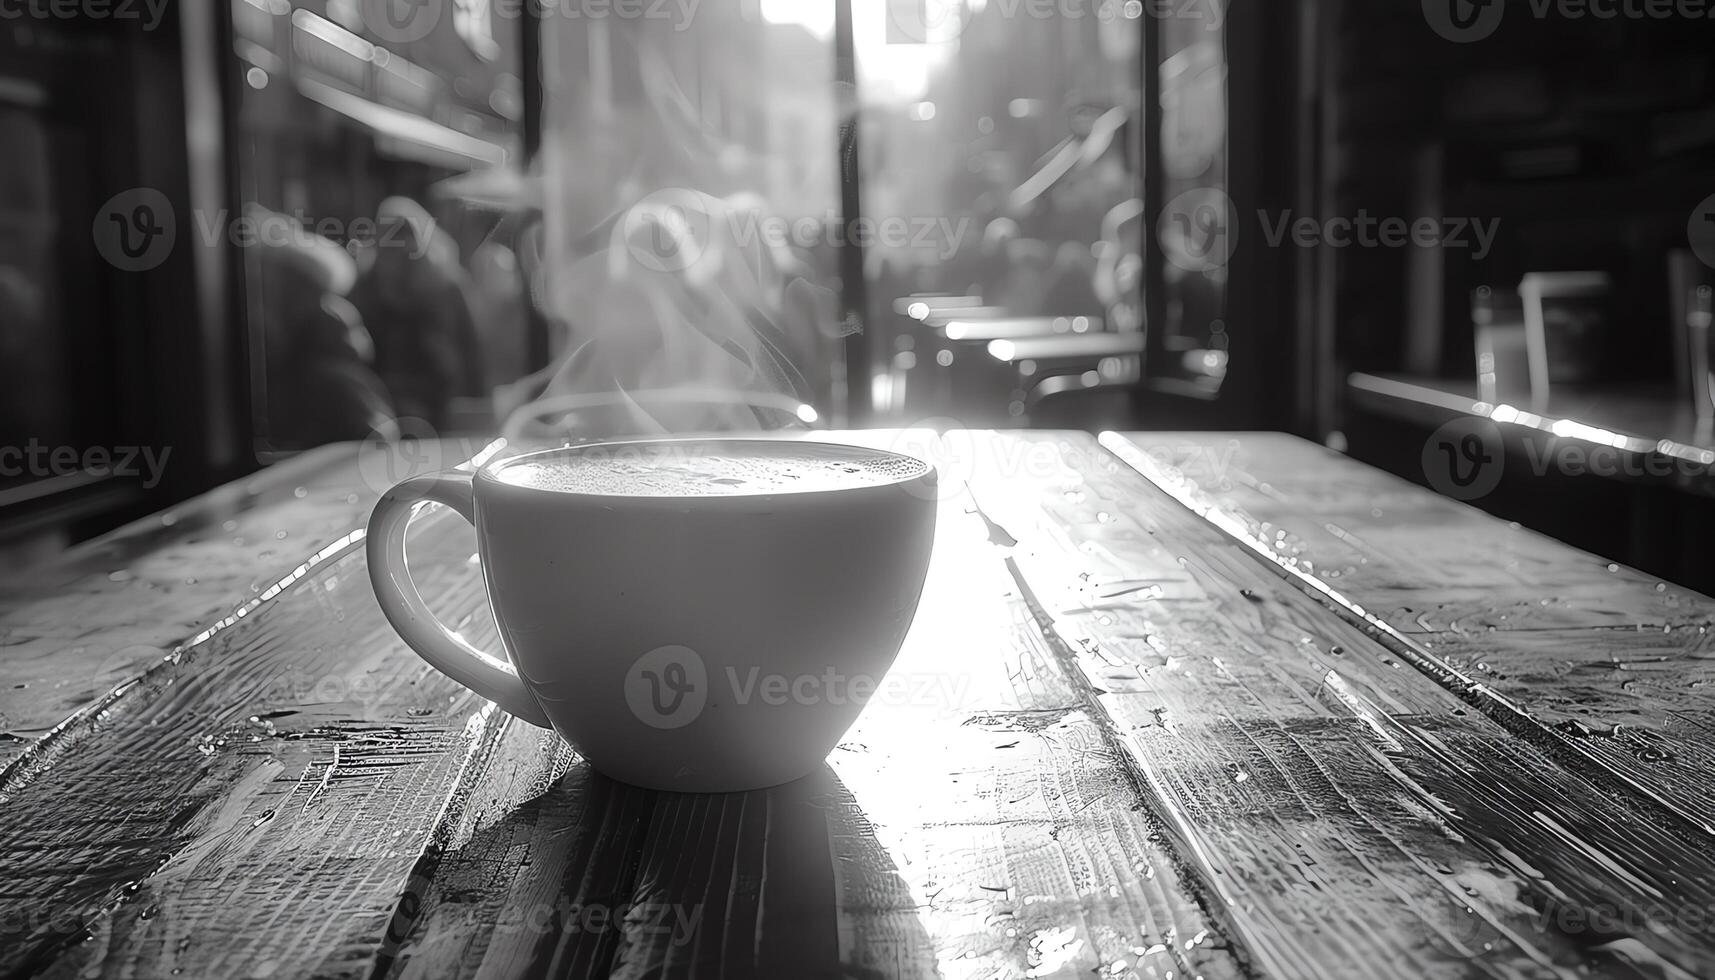 AI generated Coffee background image photo